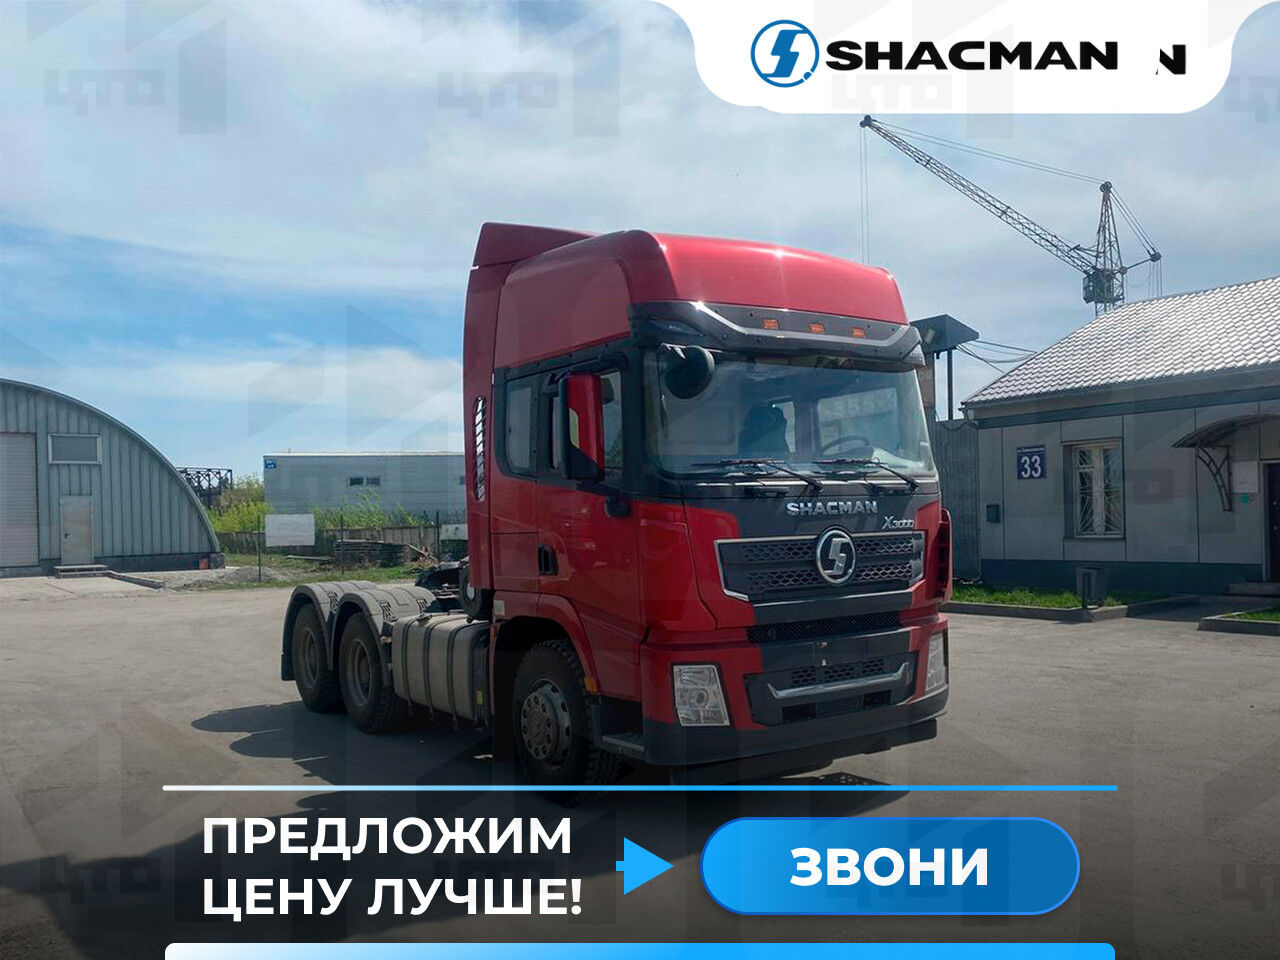 Тягач Shacman SX42584V324 6x4 430 л.с. red Shacman (Shaanxi)